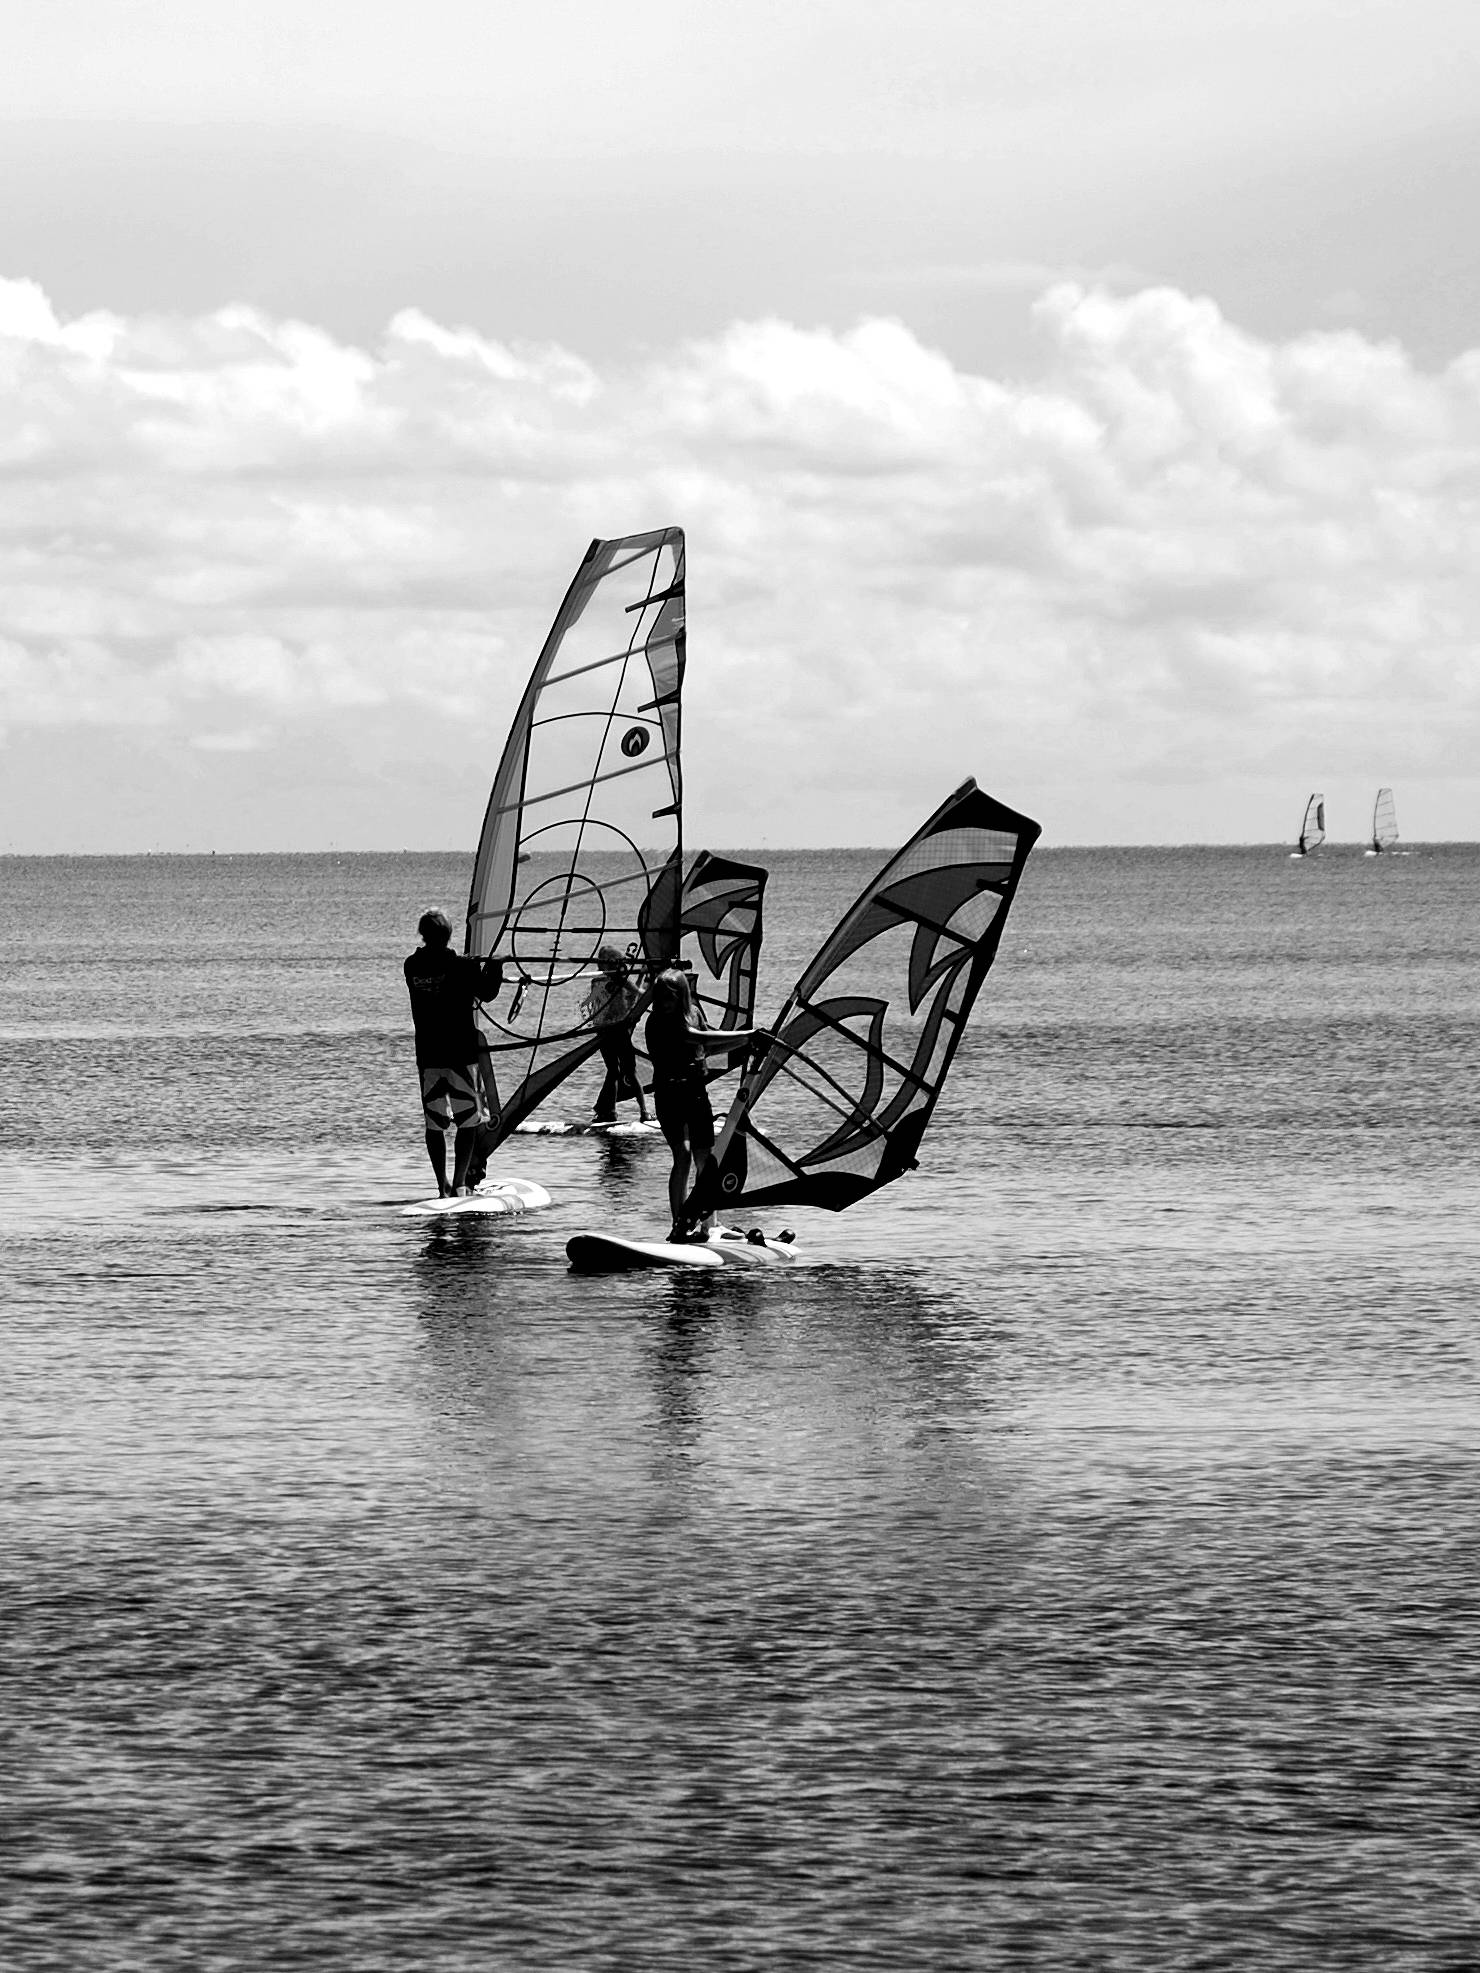 windsurfing zatoka pucka